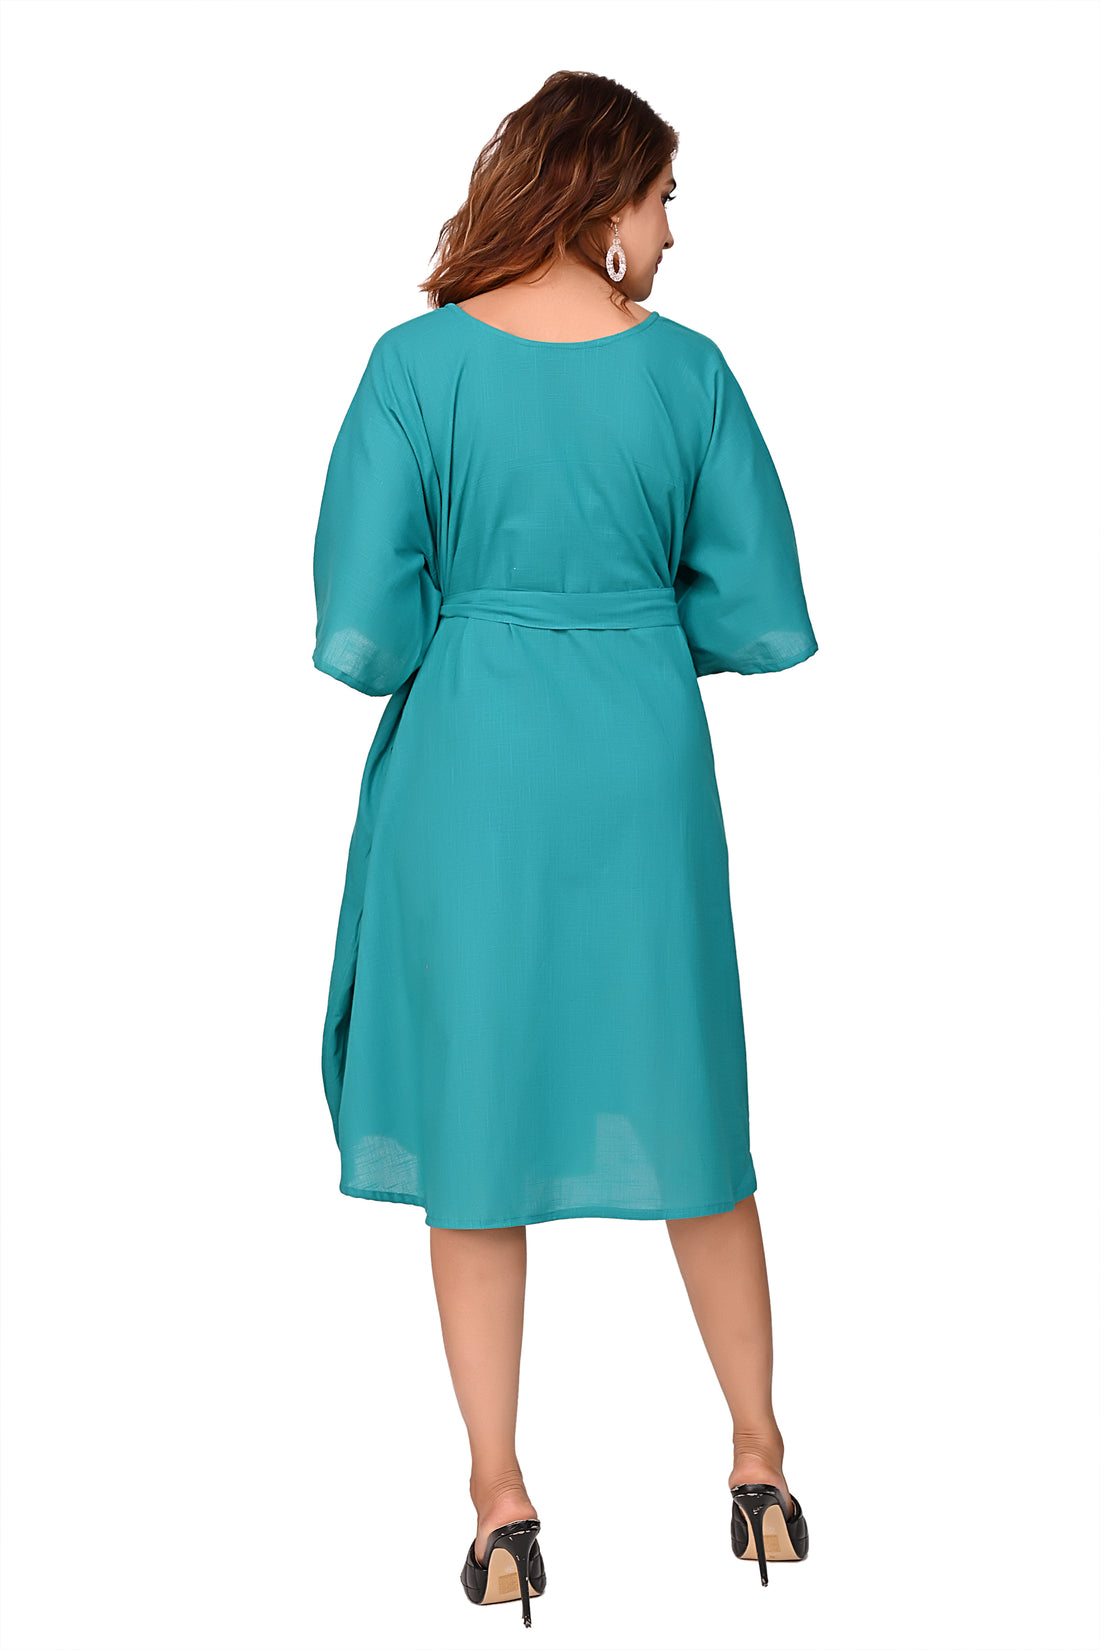 Nirmal online Premium Quality Cotton Slub Tunic Dress for Women in Teal Blue Colour